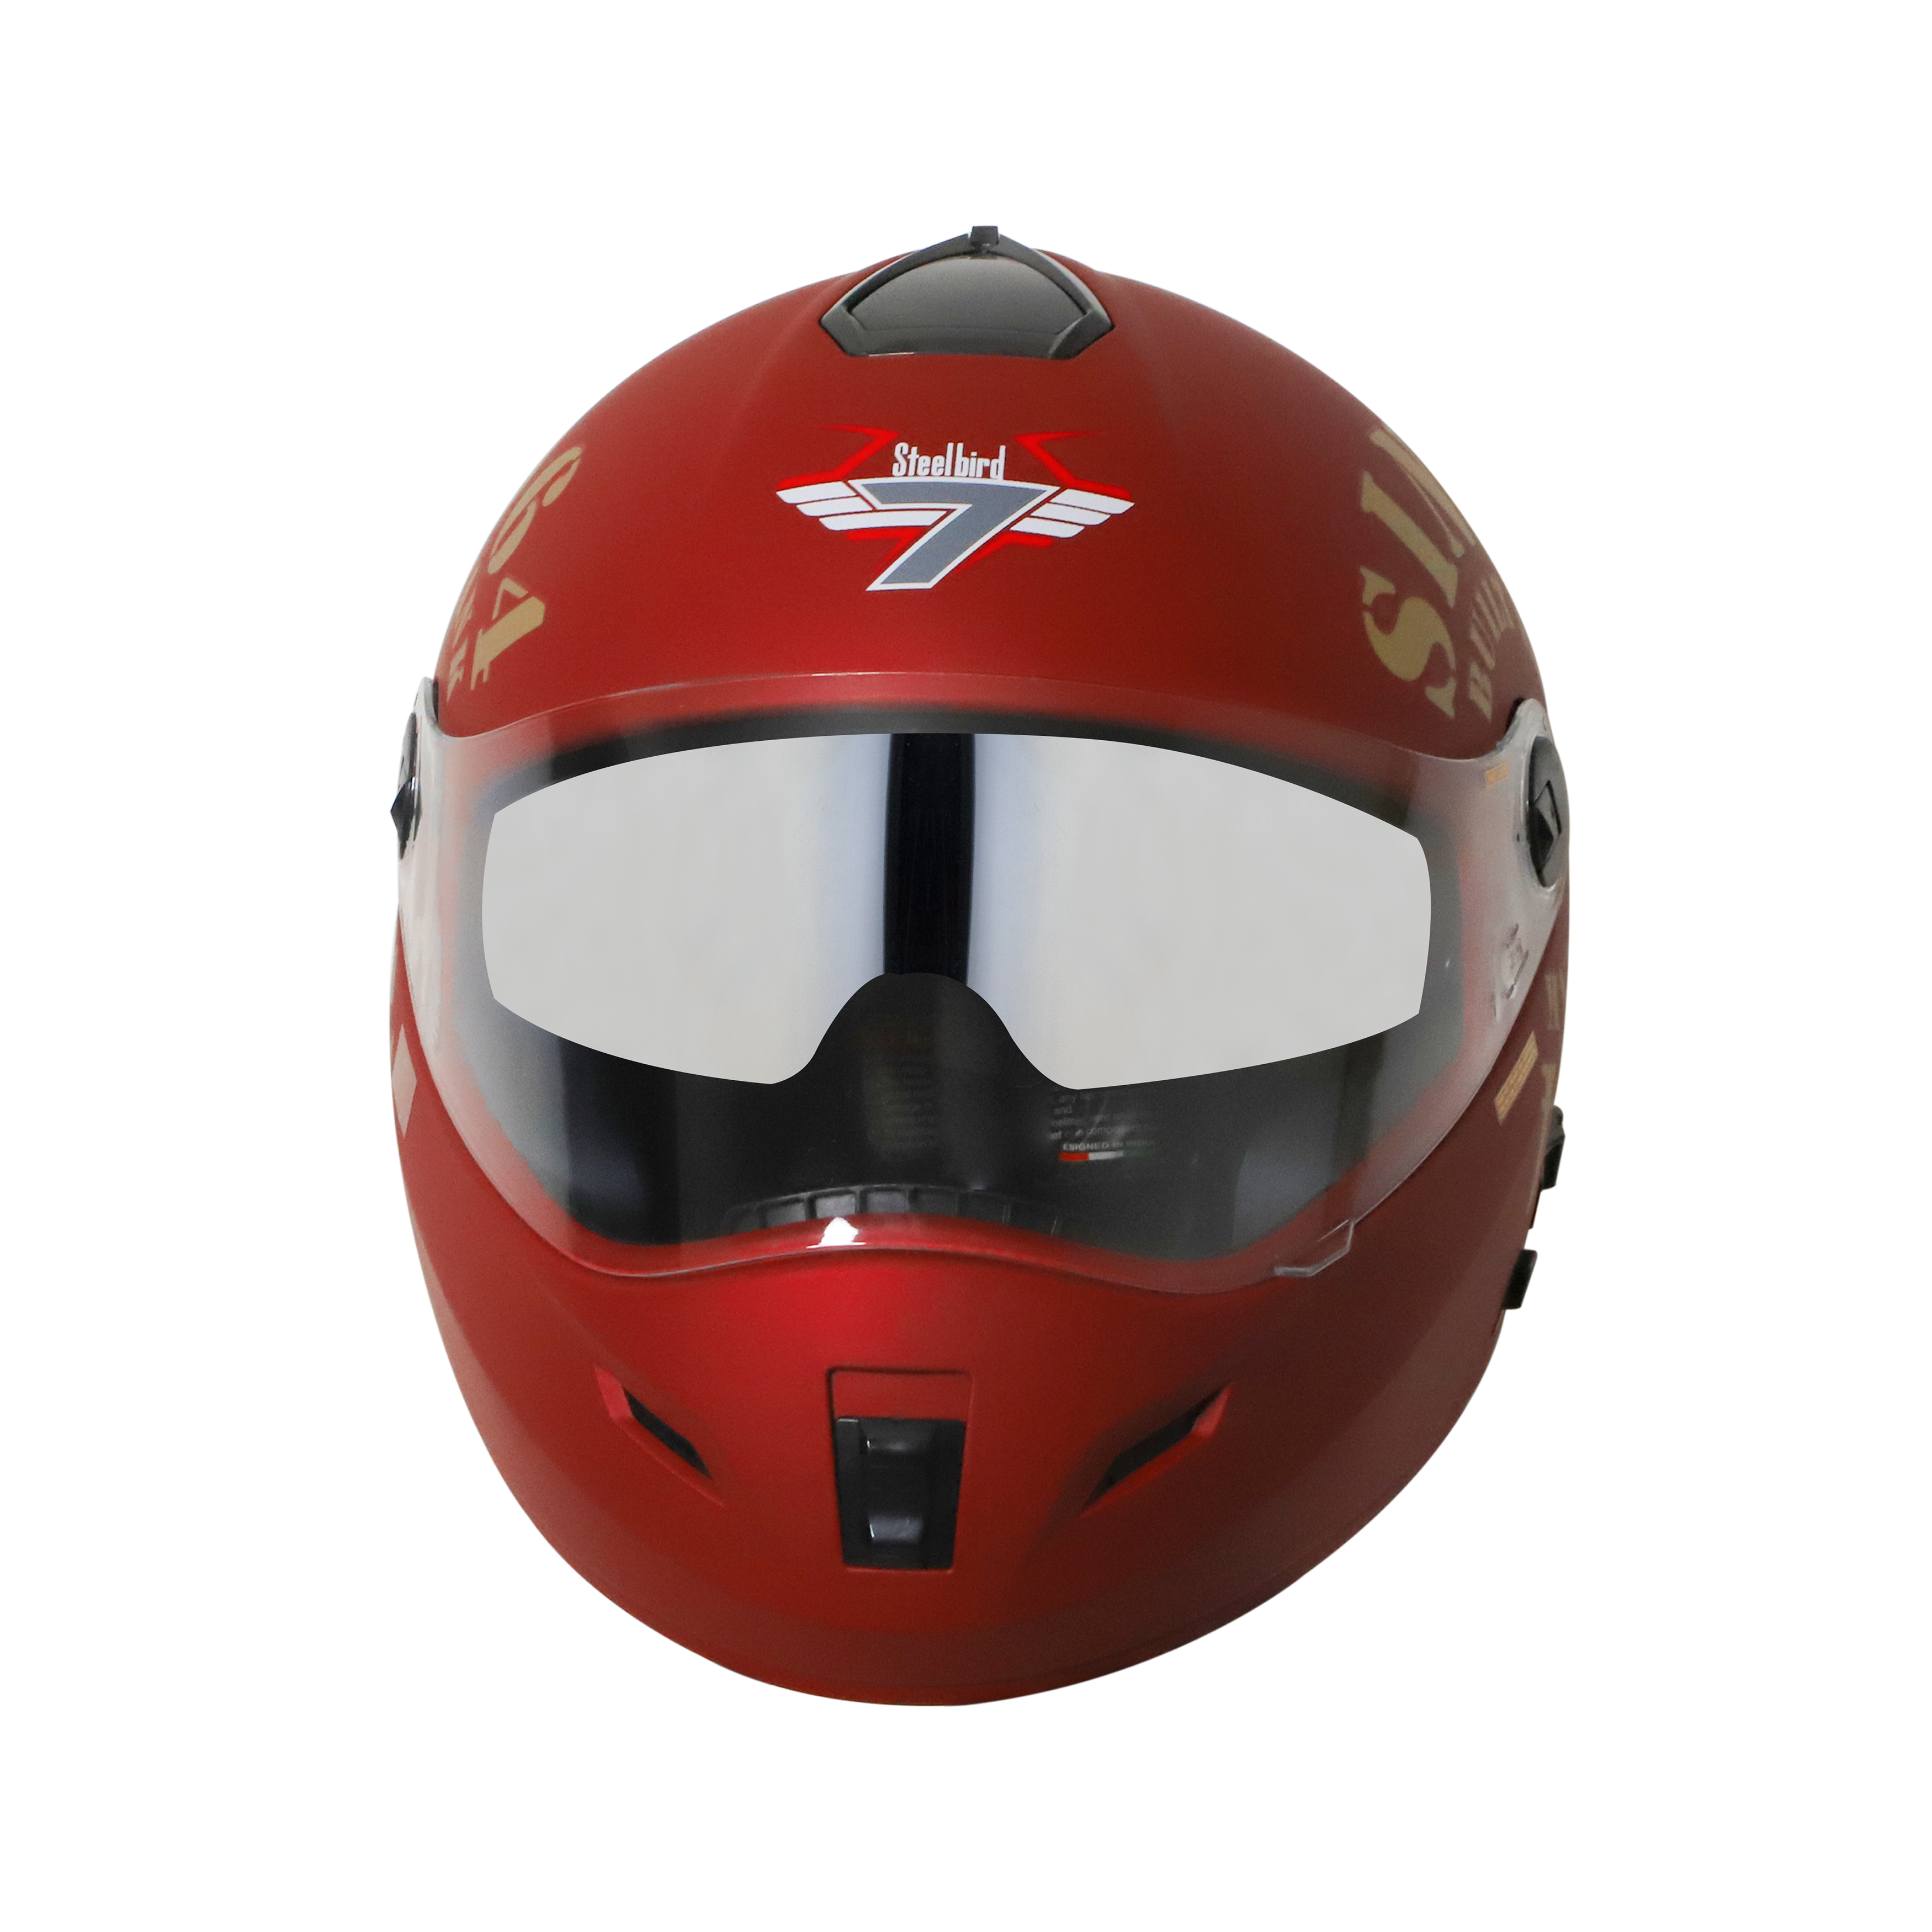 Steelbird Cyborg Tank Full Face Helmet With Chrome Silver Sun Shield, ISI Certified Helmet (Matt Maroon Gold)